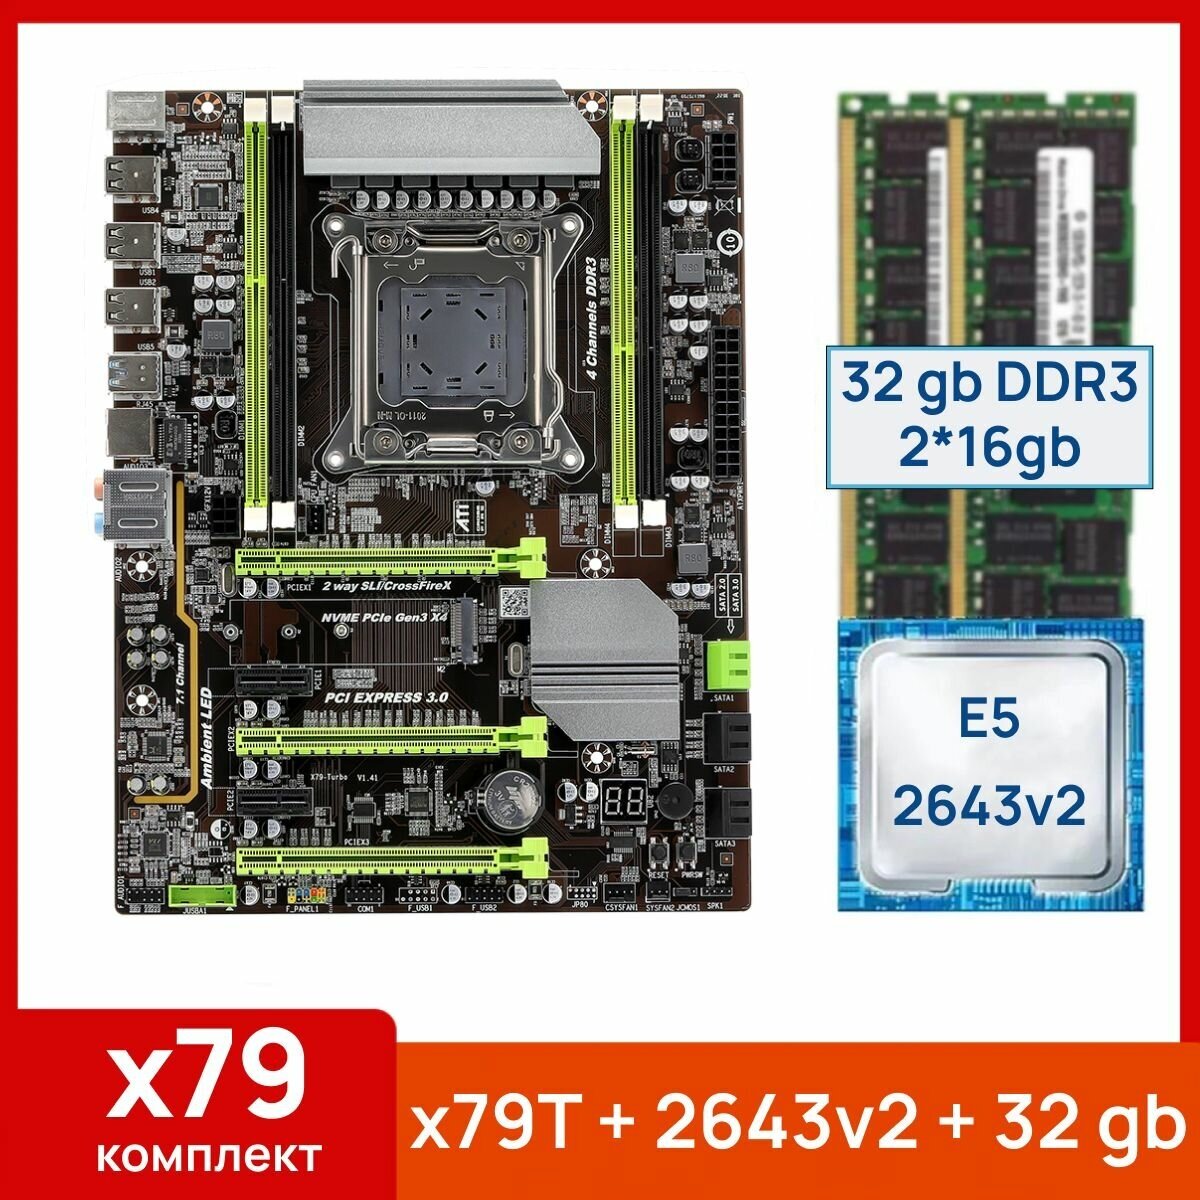 Комплект: Atermiter x79-Turbo + Xeon E5 2643v2 + 32 gb(2x16gb) DDR3 ecc reg